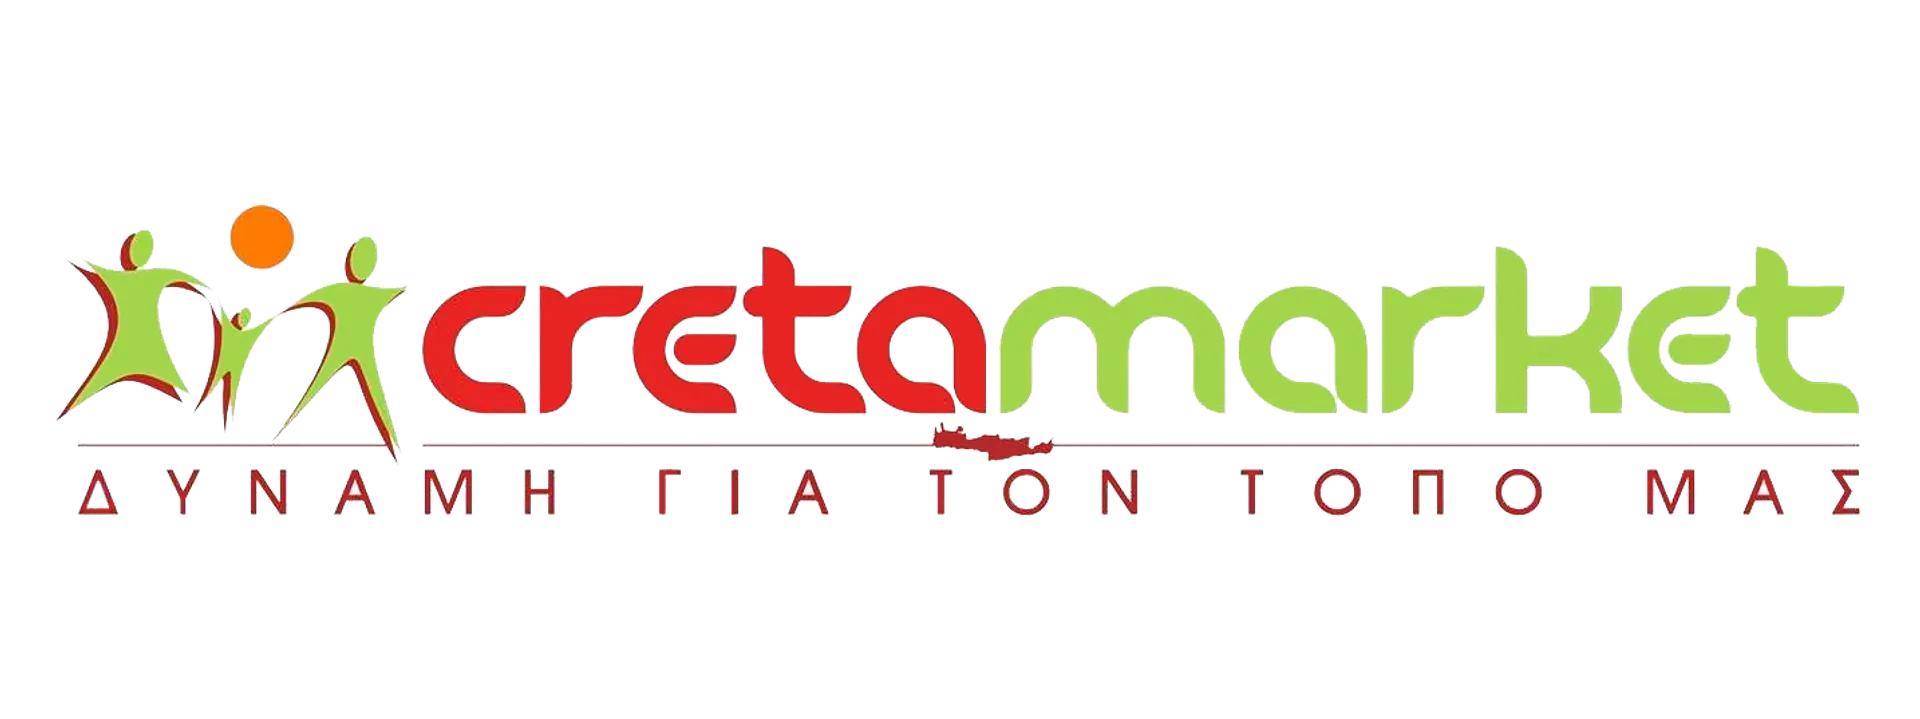 CRETA MARKET logo